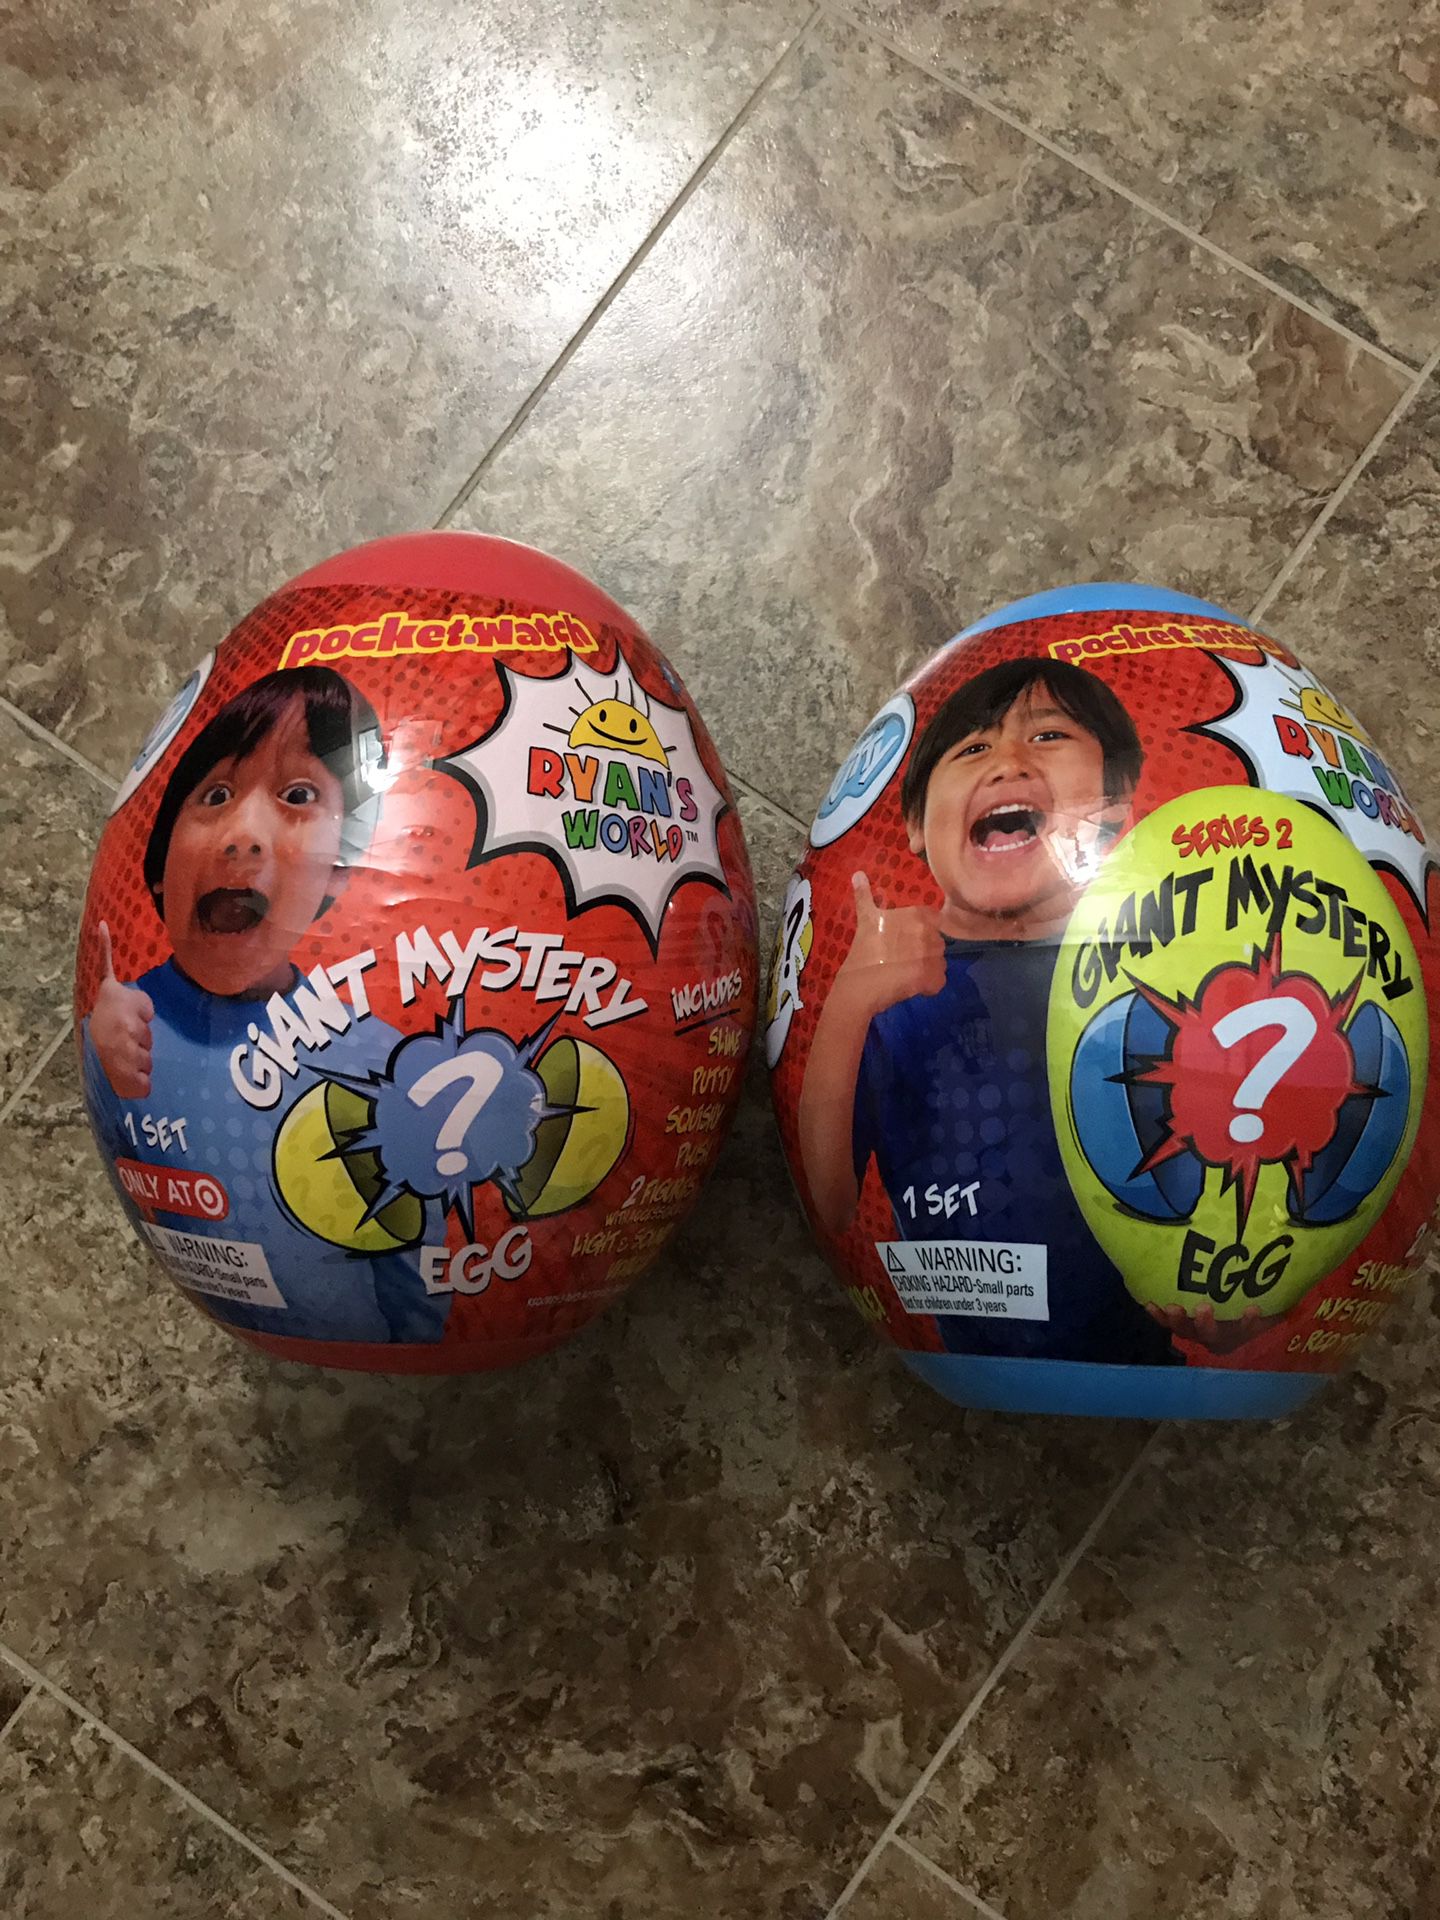 Ryan’s works giant mystery eggs (Target&walmart)